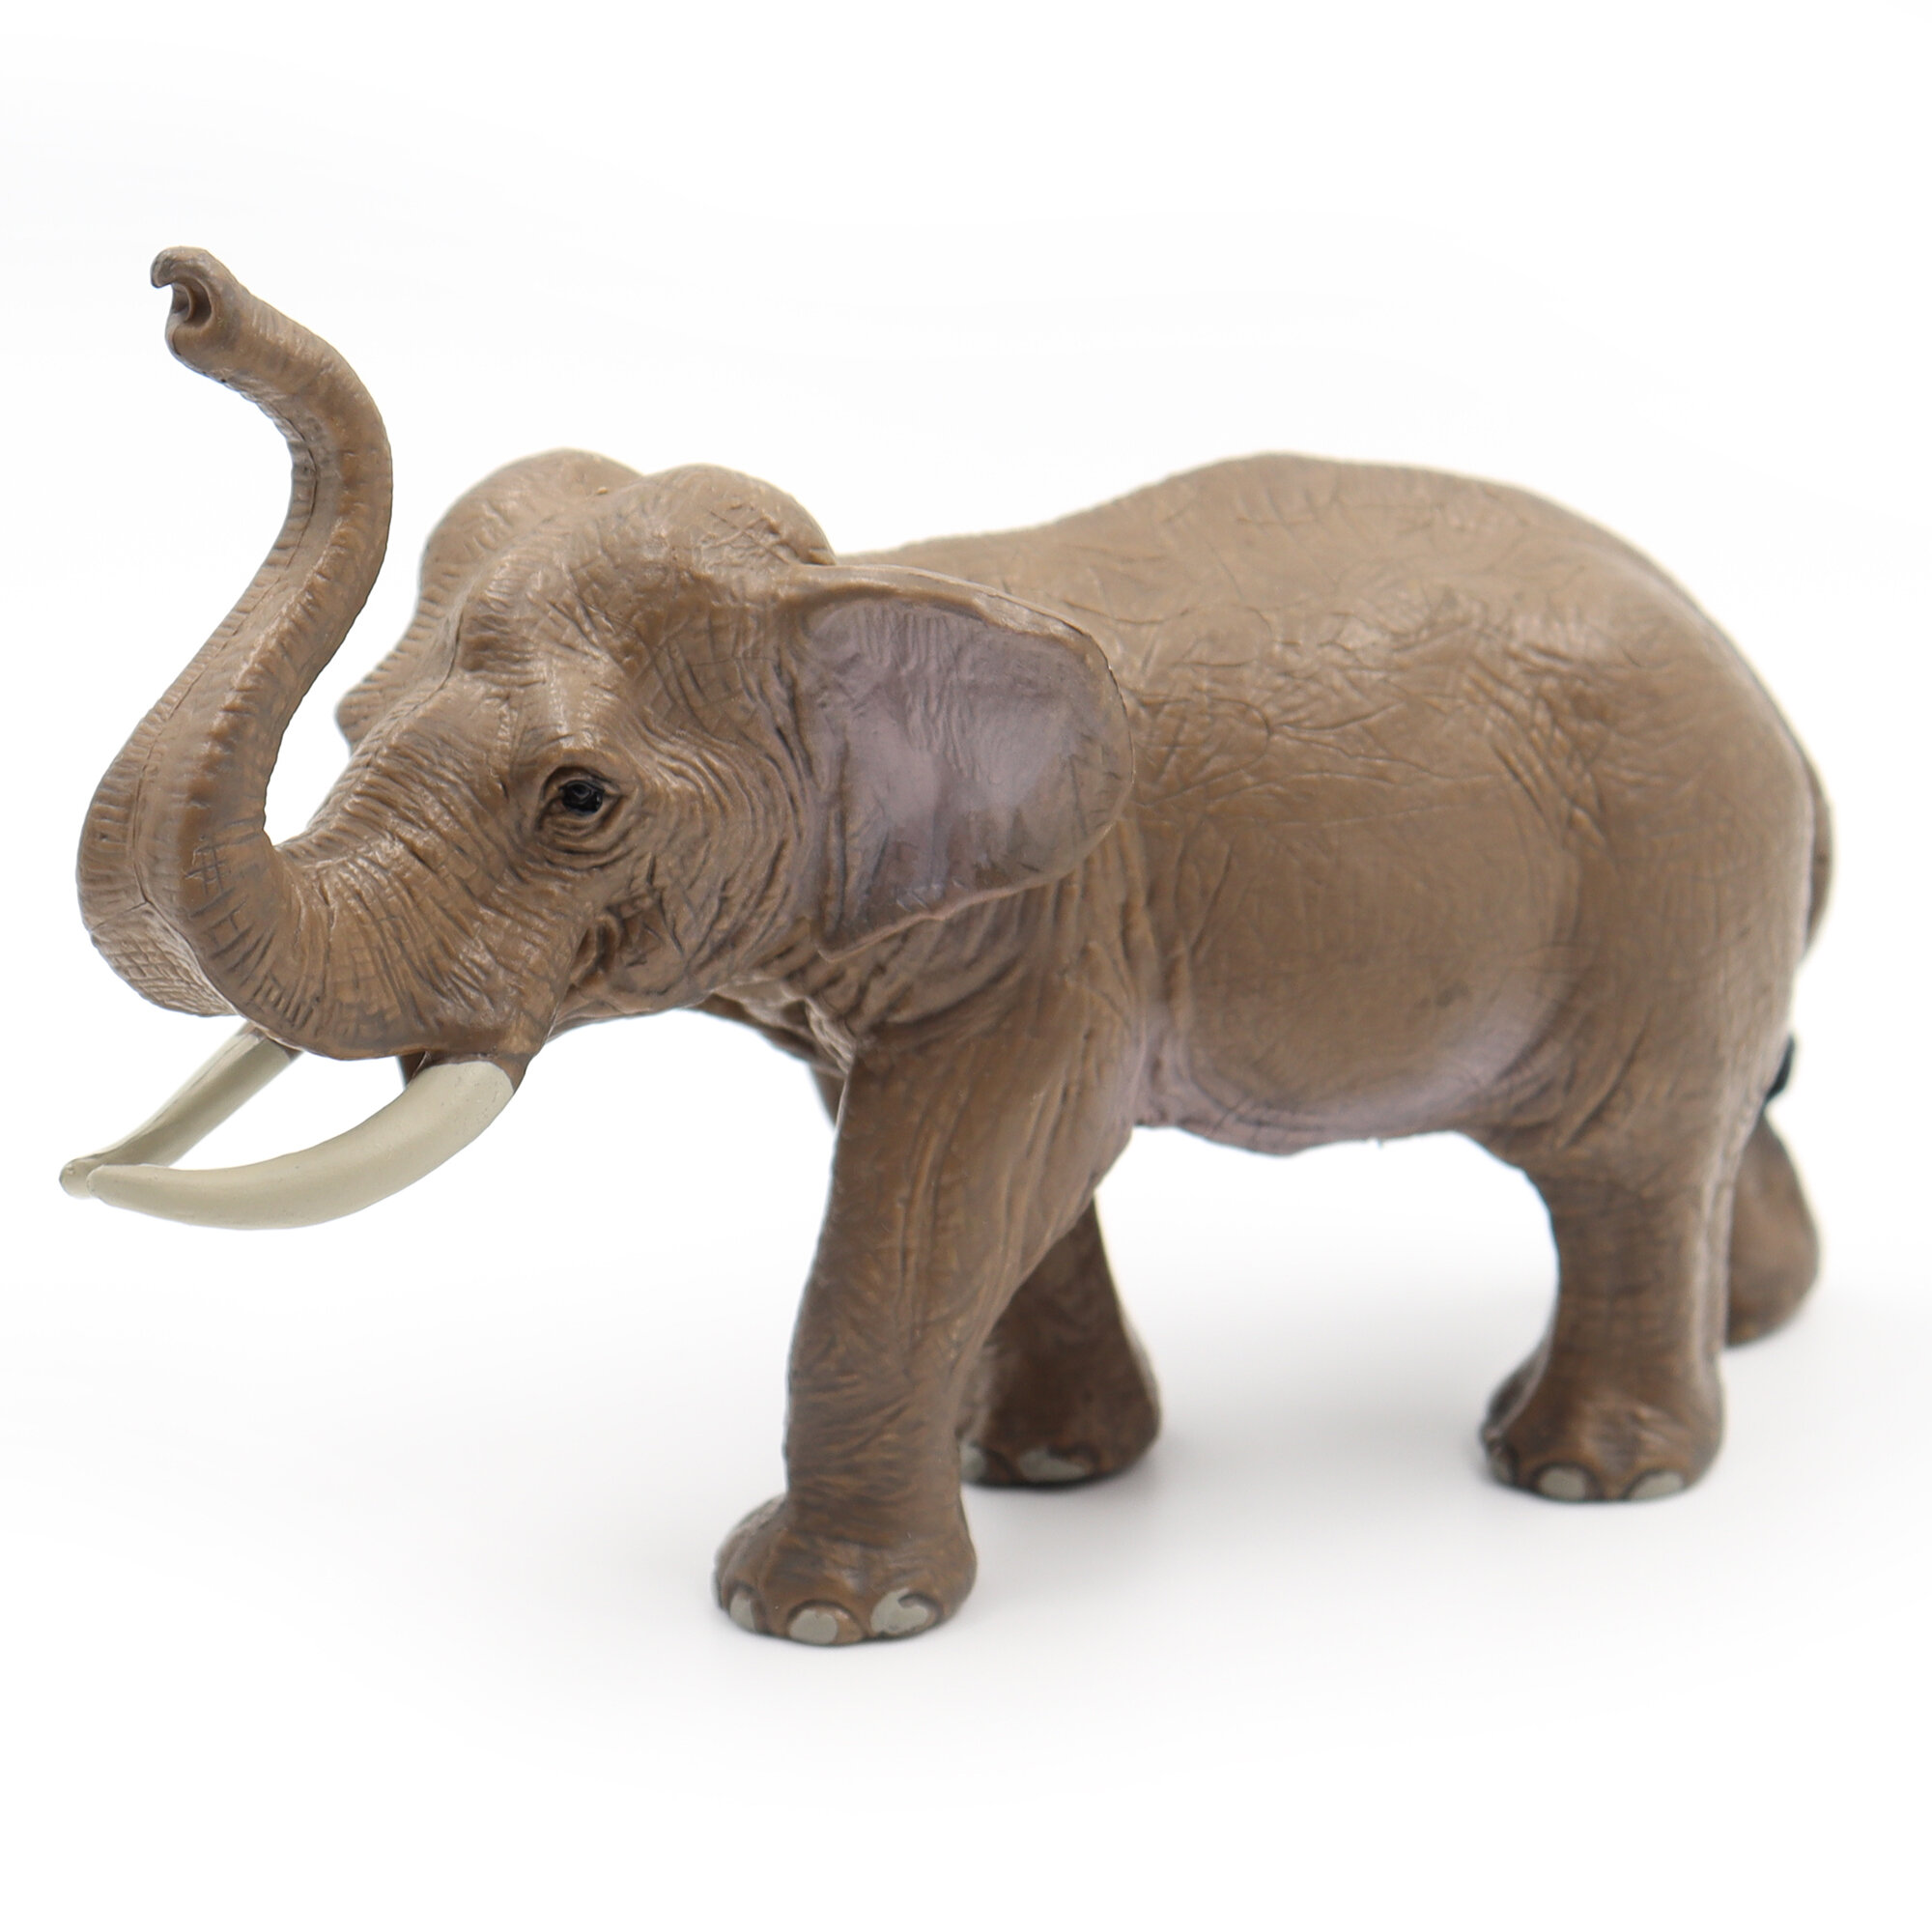 Фигурка животного Zateyo Слон, игрушка для детей коллекционная, декоративная 11х7.5х17 см